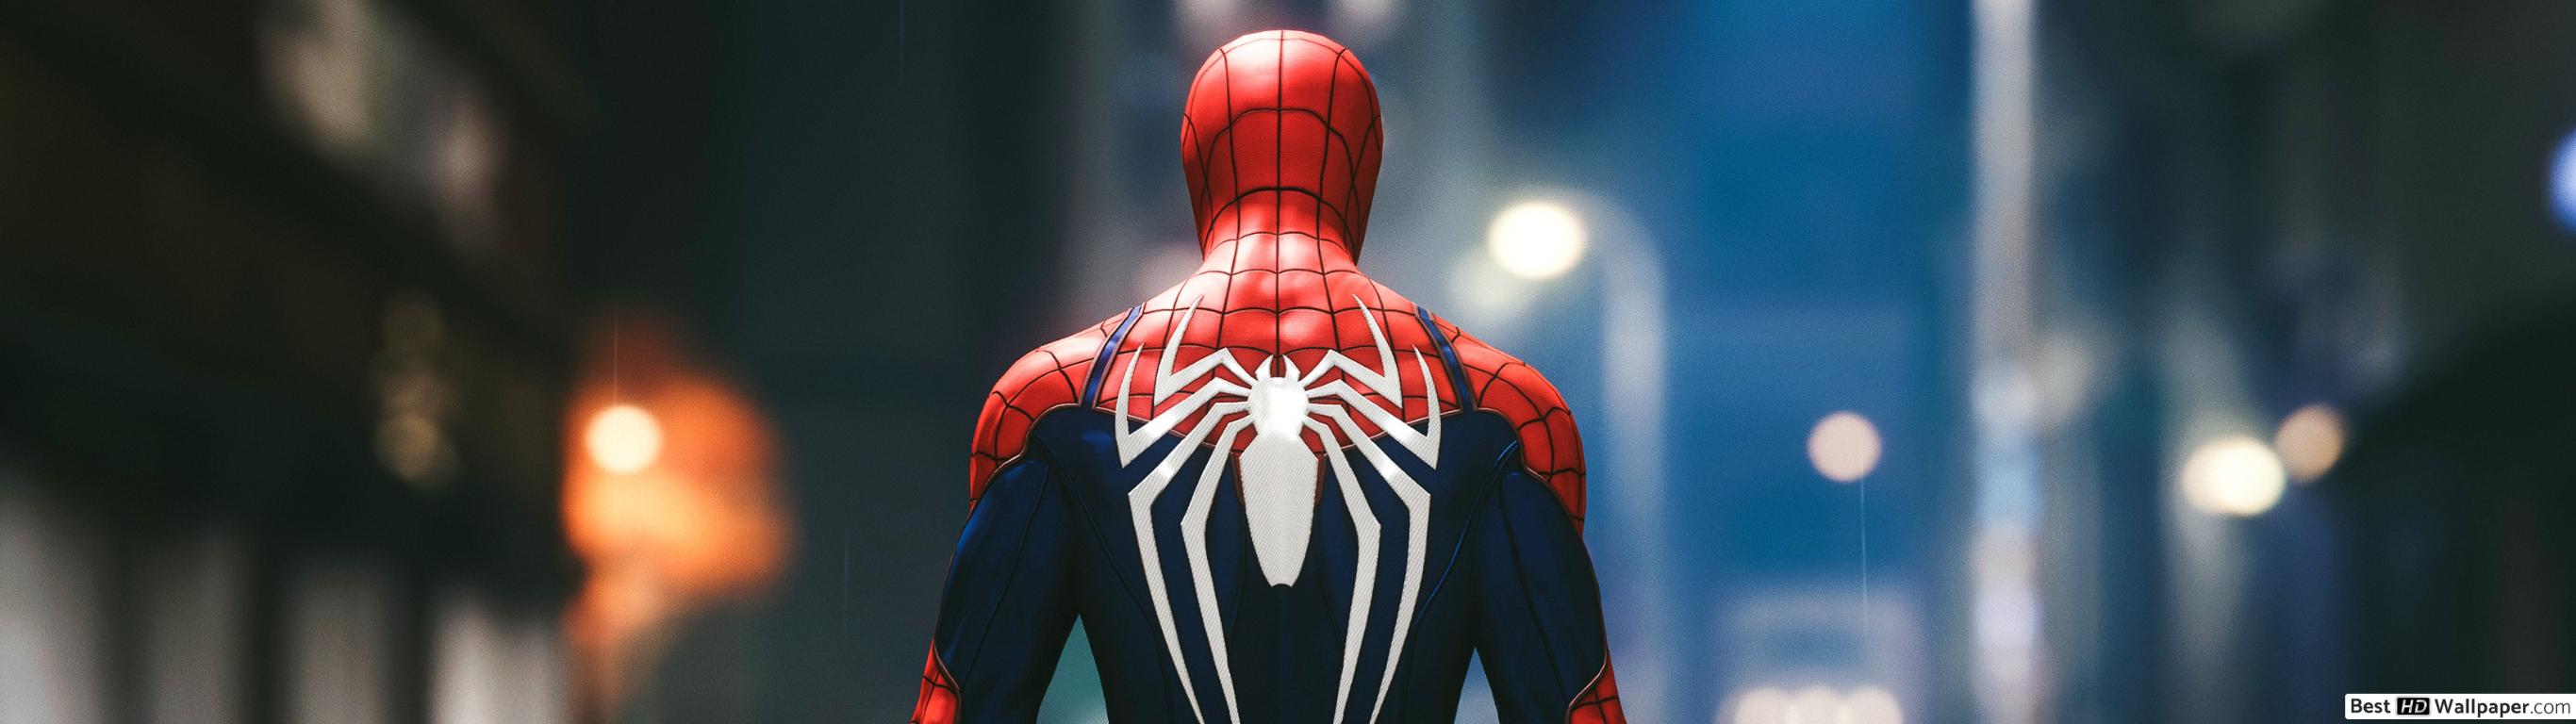 superhero wallpaper,spider man,superhero,fictional character,animation,hero